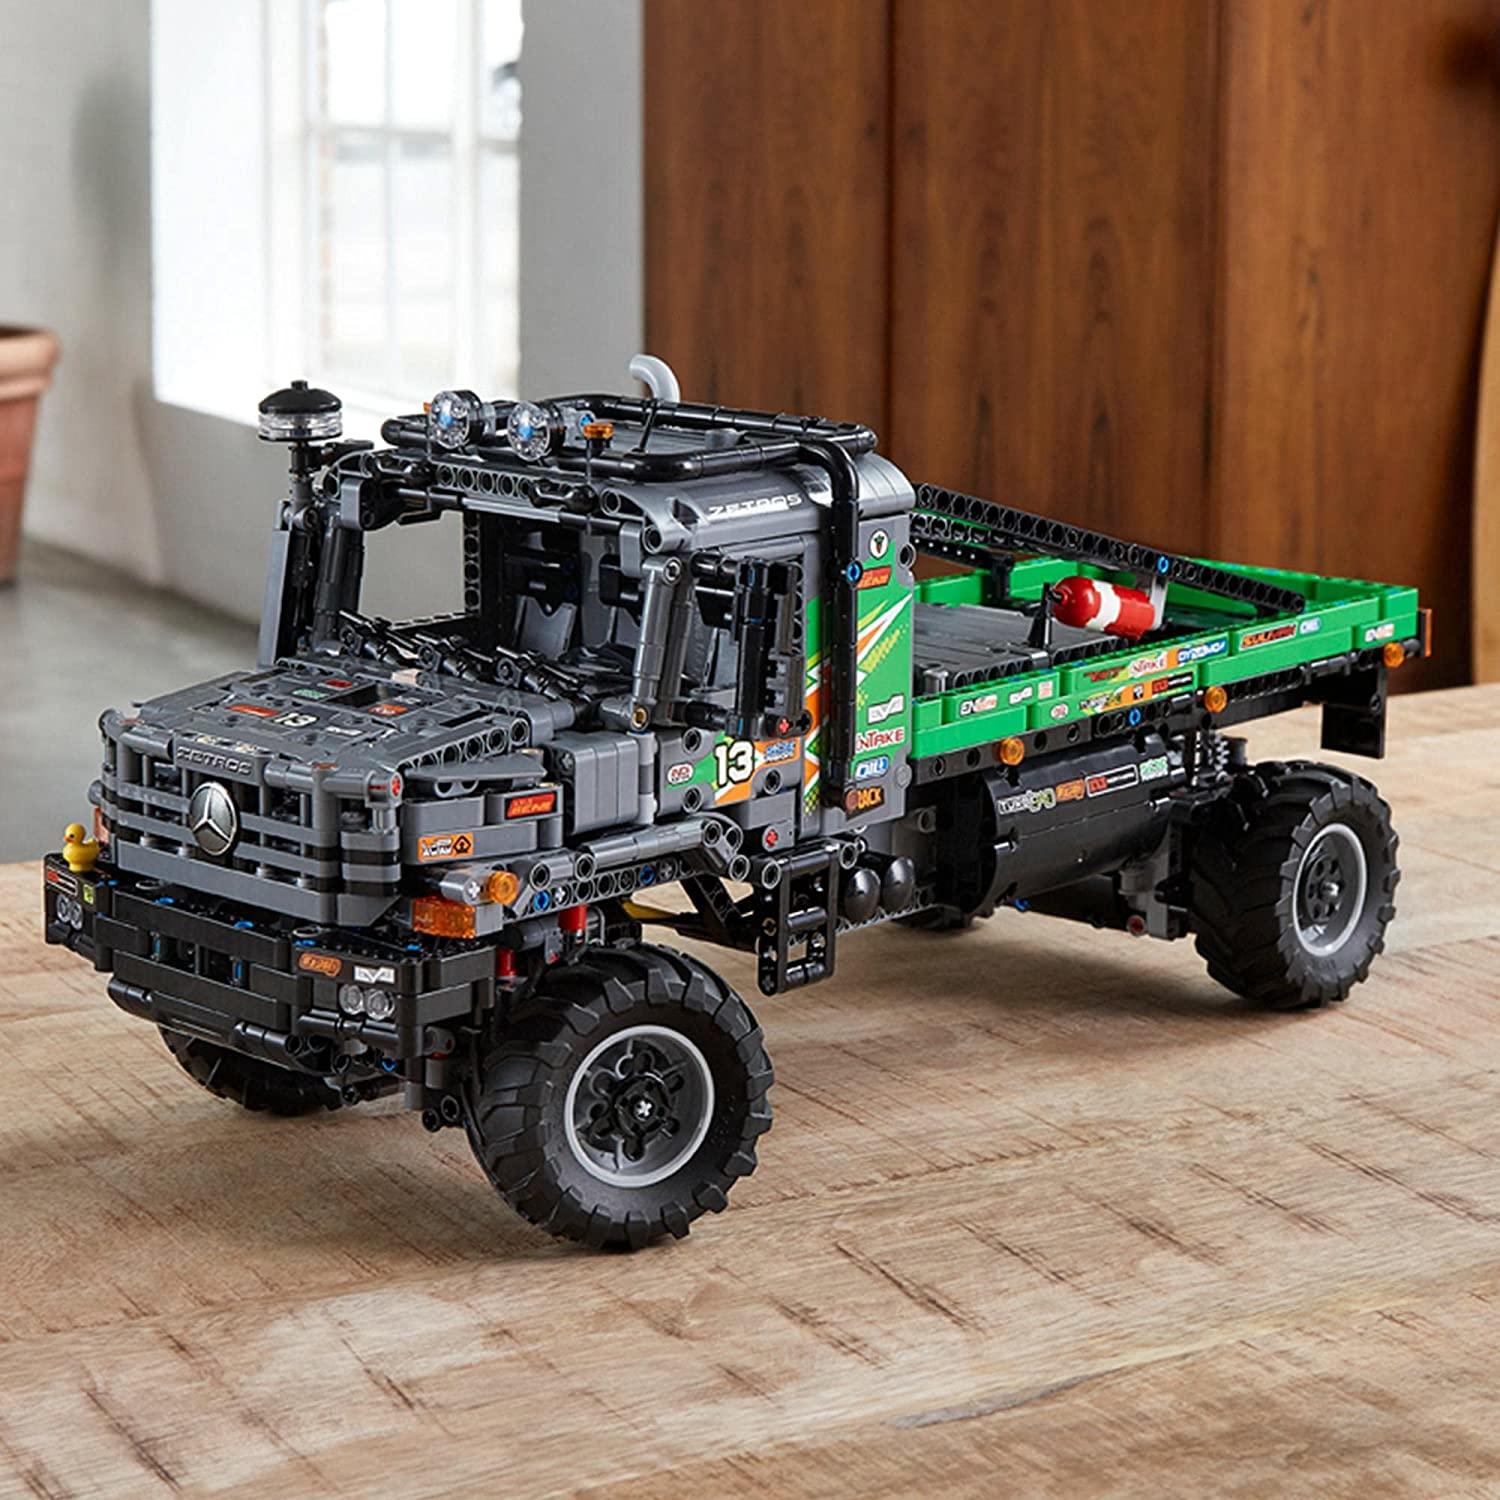 Lego 42129 Technic 4x4 Mercedes-Benz Zetros Offroad Truck Toymaster Ballina